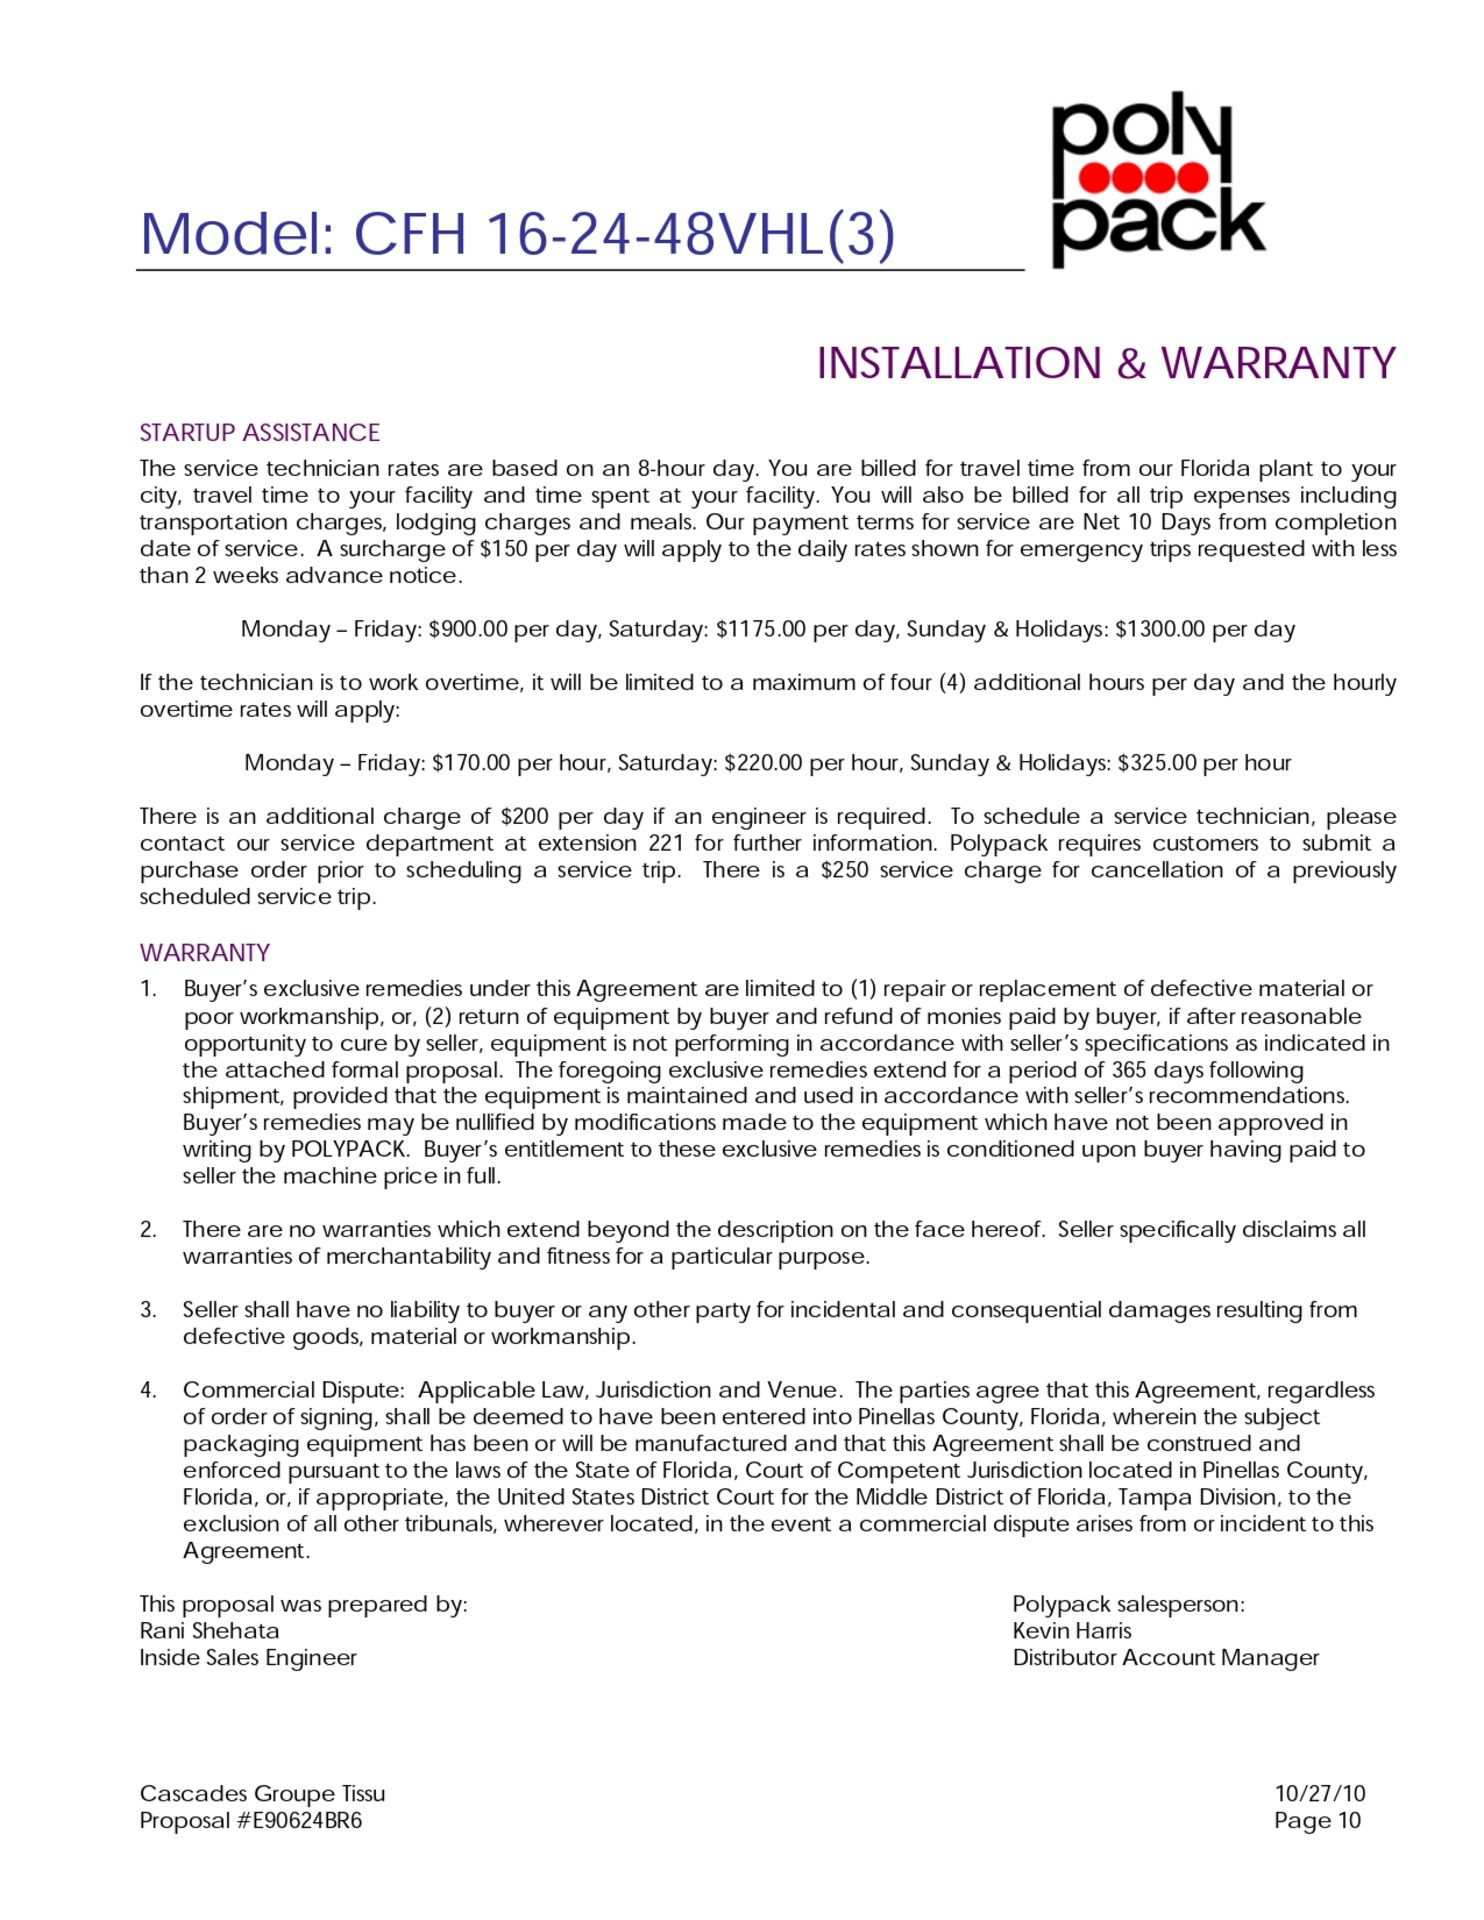 2010 SHRINK WRAPPER FULLY AUTOMATIC, BRAND: POLY PACK, MODEL CFH 16-24-48VHL(3), 600V, 40AMP, - Image 22 of 29